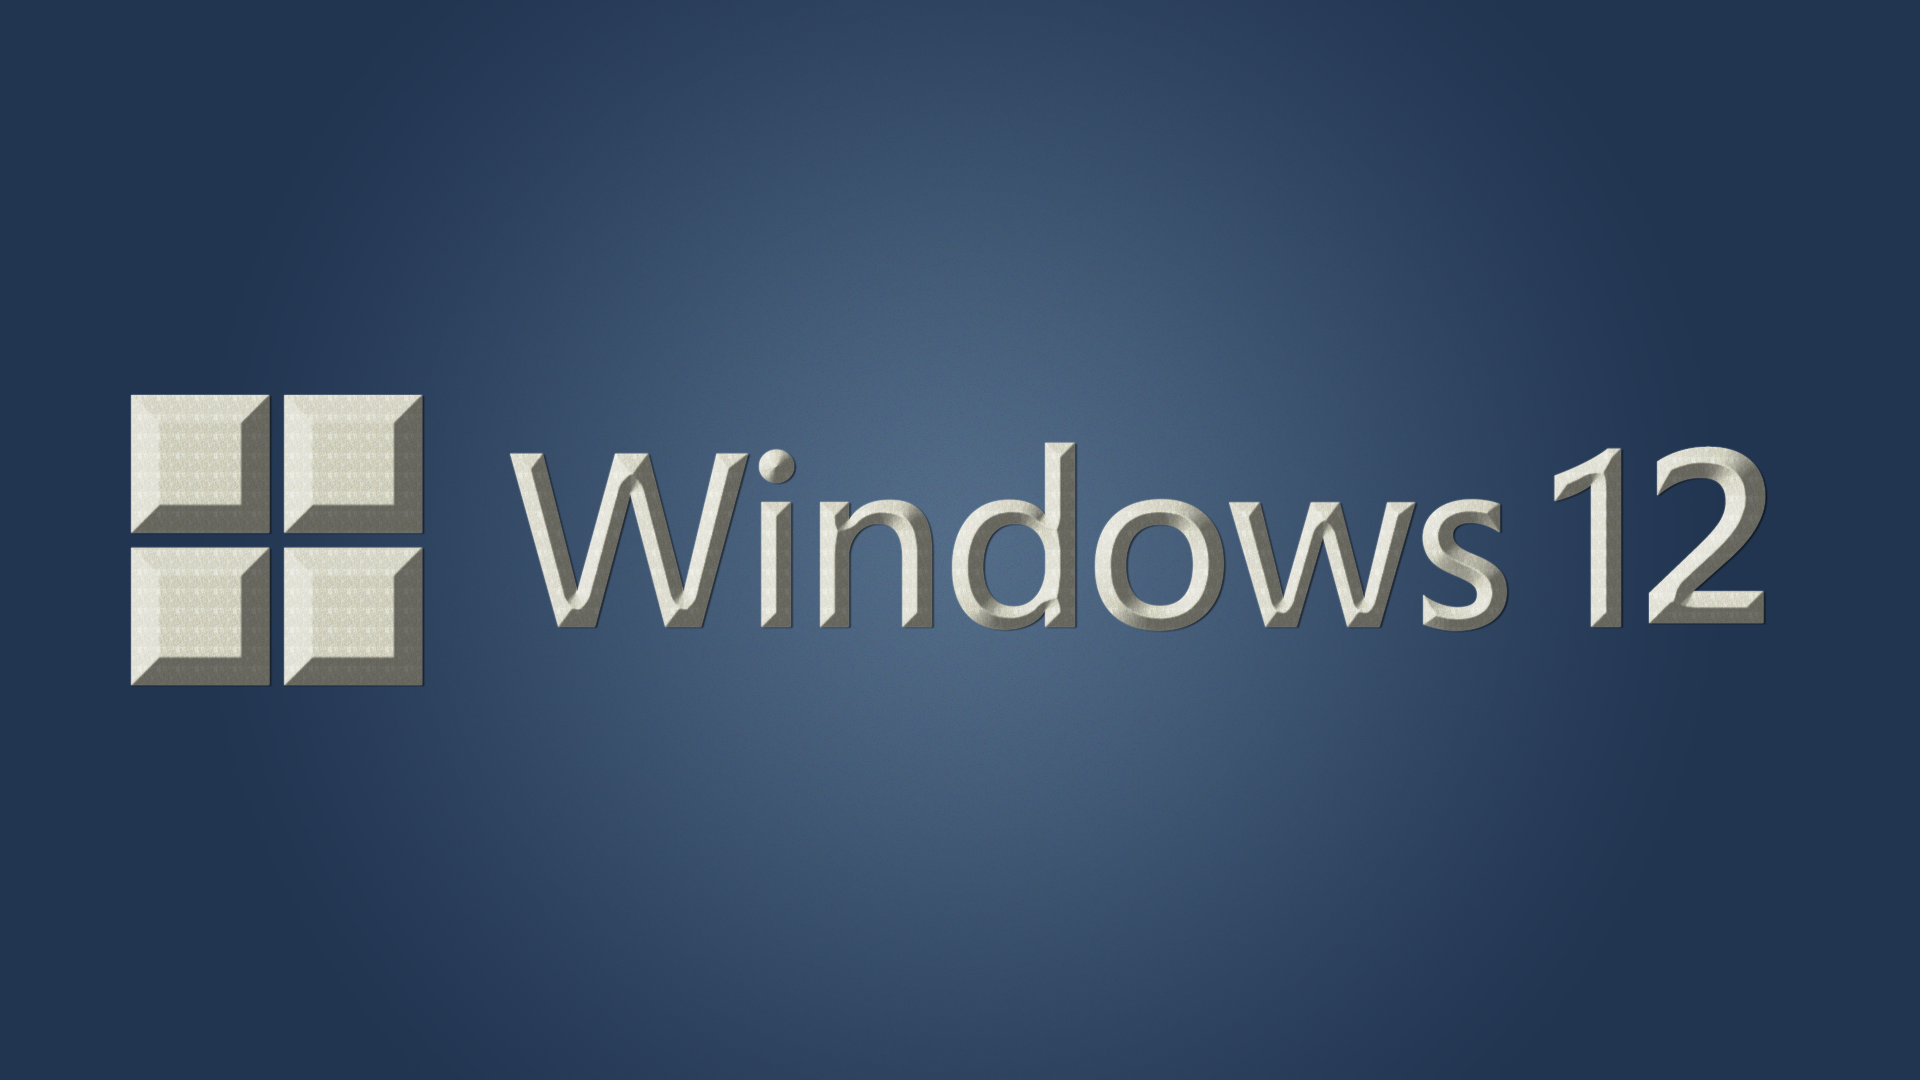 Windows 12 retro banner